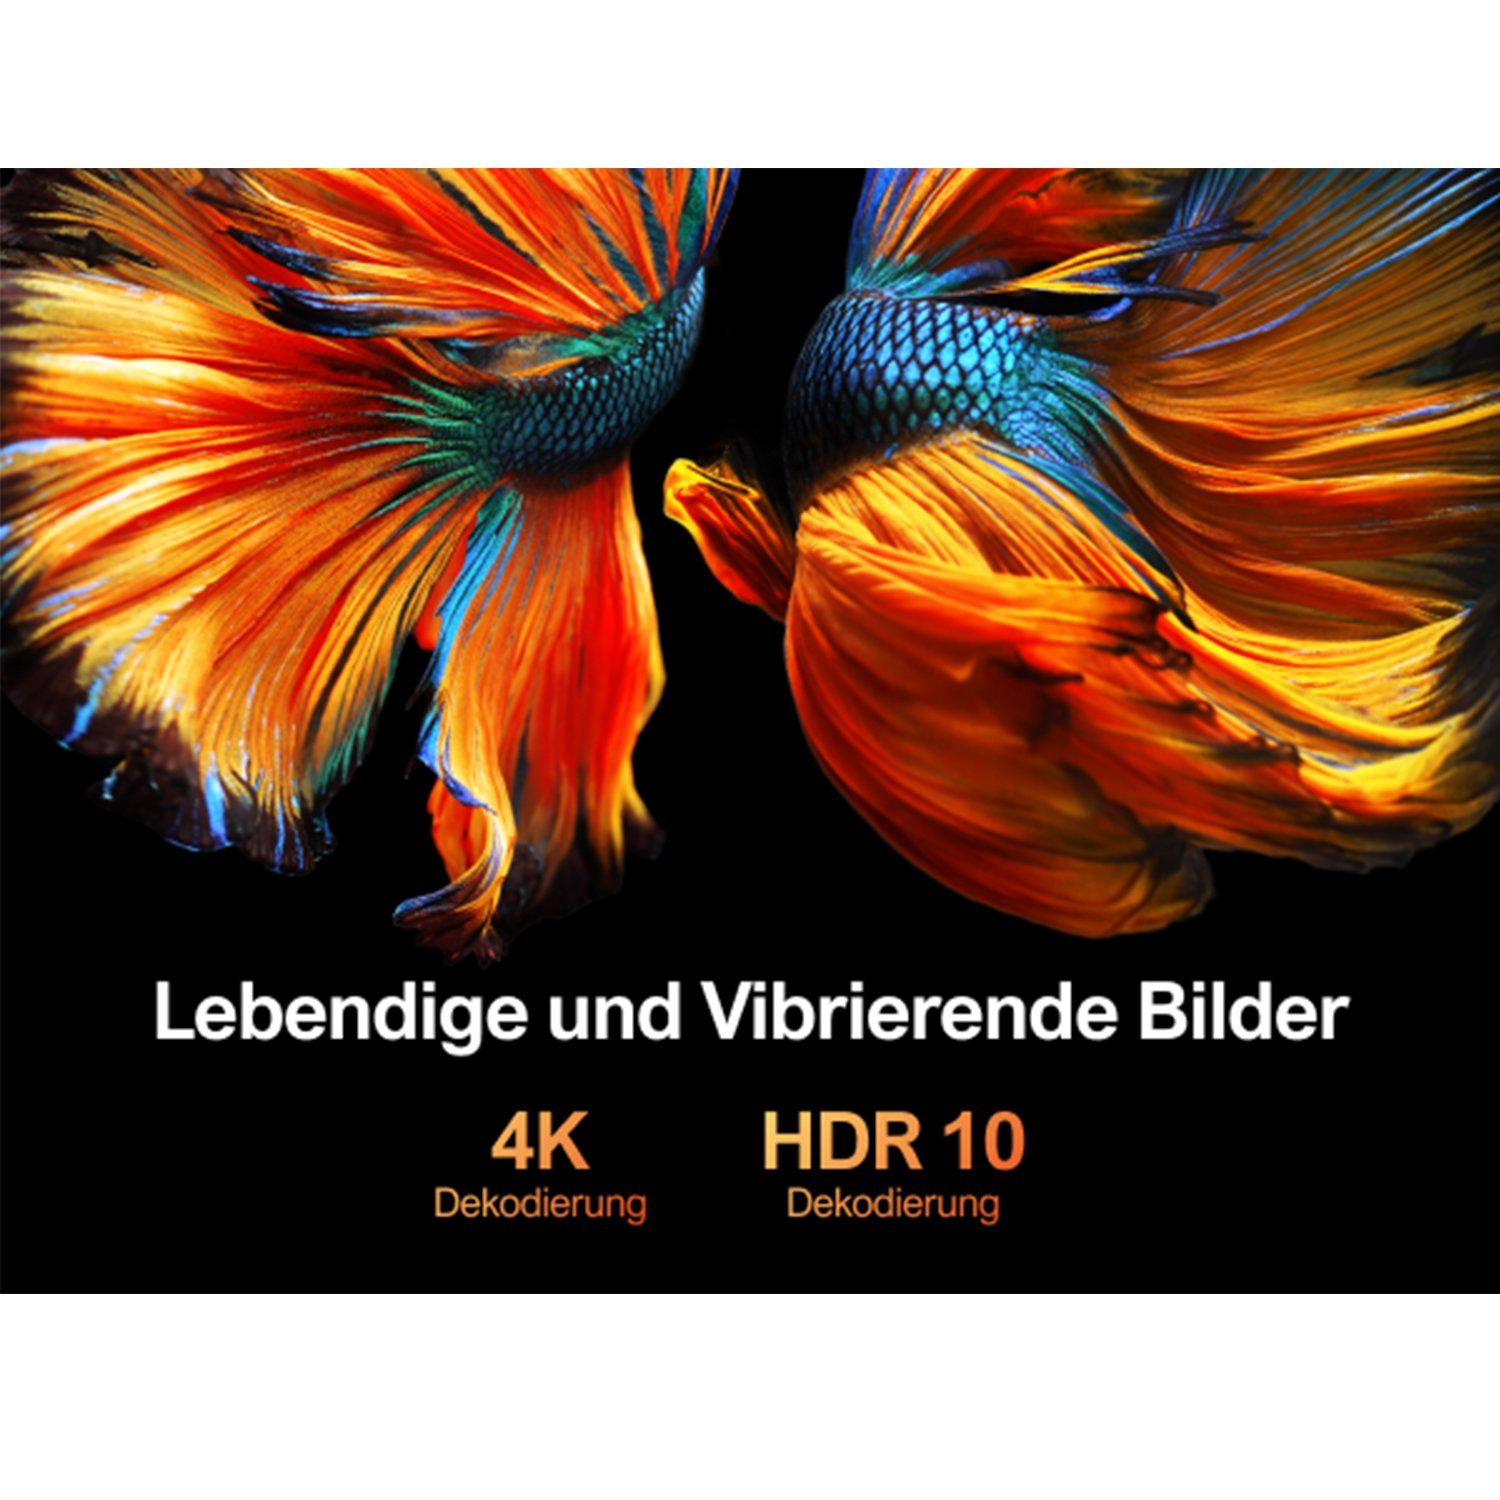 Ultimea Native 1080P Full 1080 Autofokus&6D-Autotrapezkorrektur) x (21000 HD lm, px, HD,4K-Decodierung&HDR10, 15000:1, Beamer Full 1920 schwarz